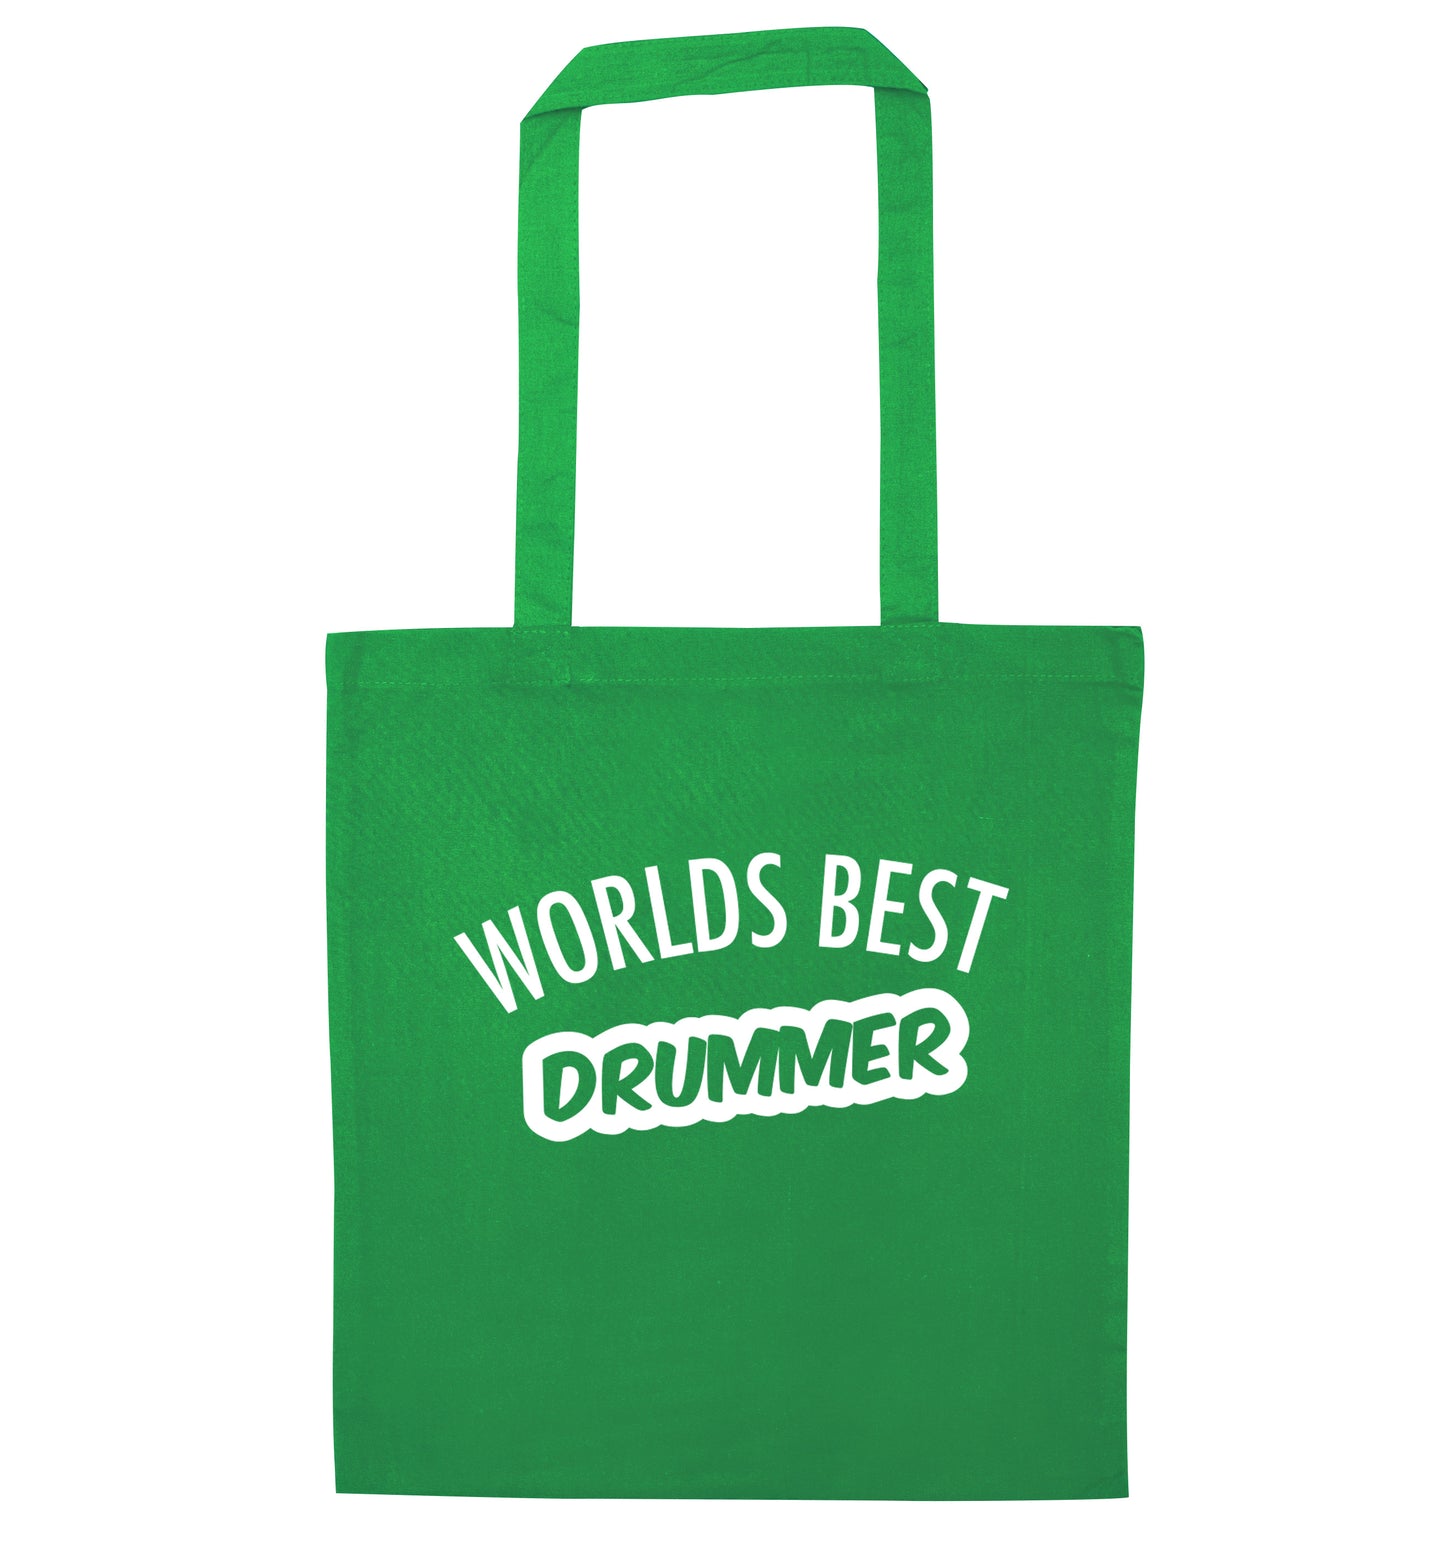 Worlds best drummer green tote bag